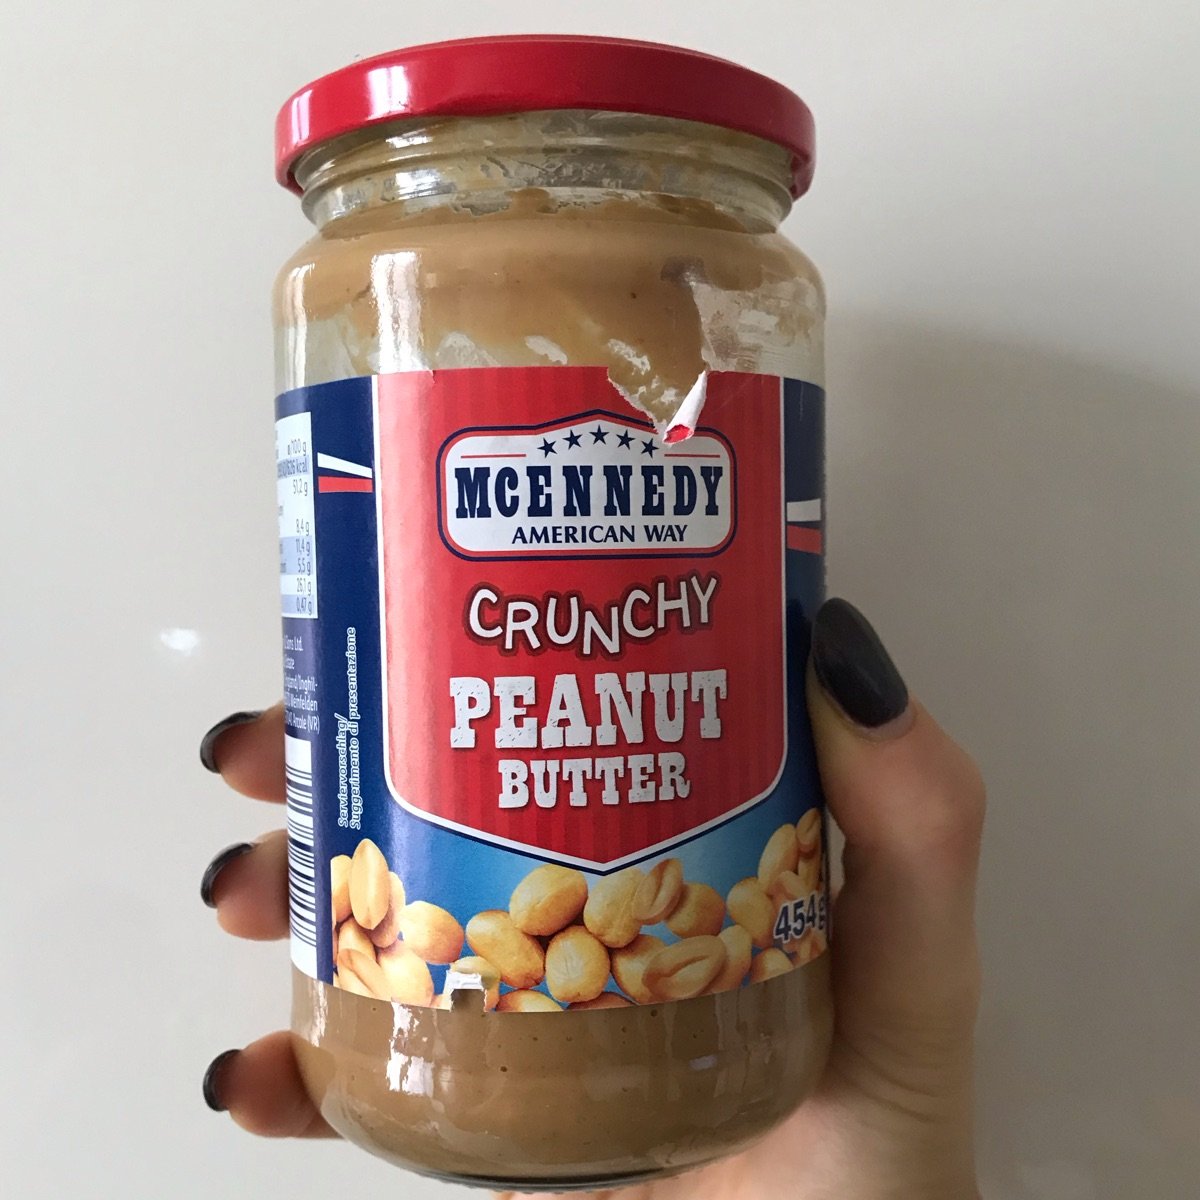 Crunchy peanut butter - McEnnedy - 454g